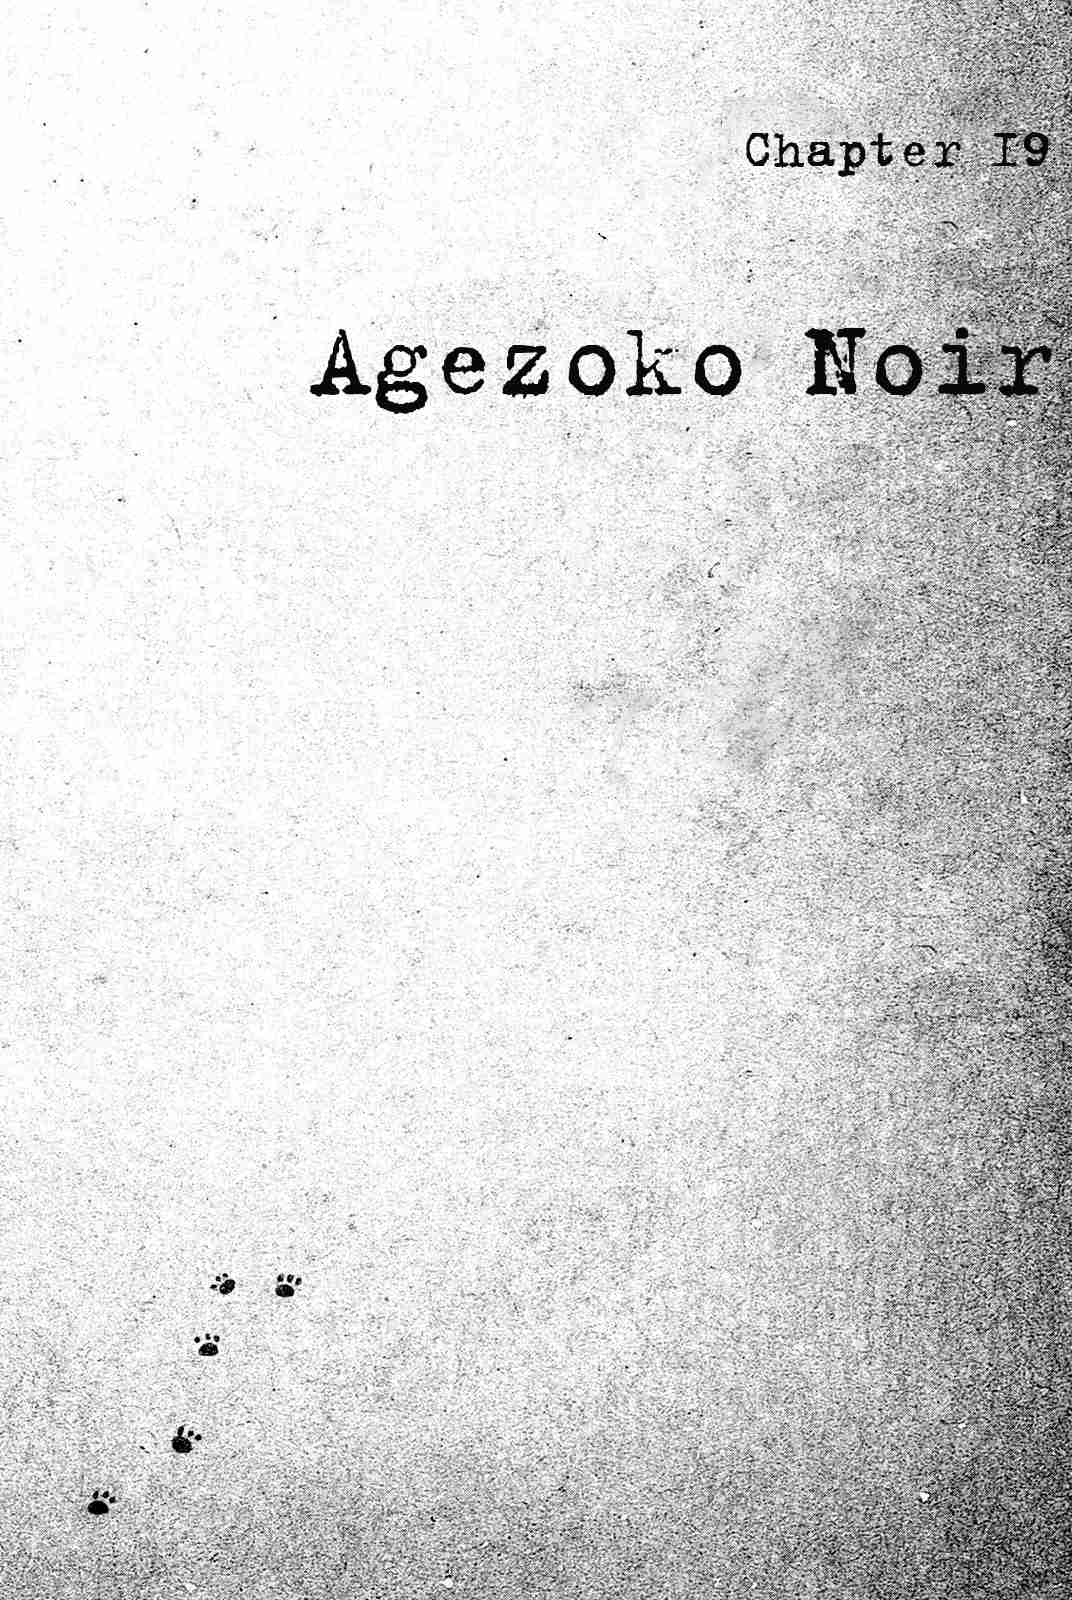 Guns and Stamps Vol. 3 Ch. 19 Agezoko Noir